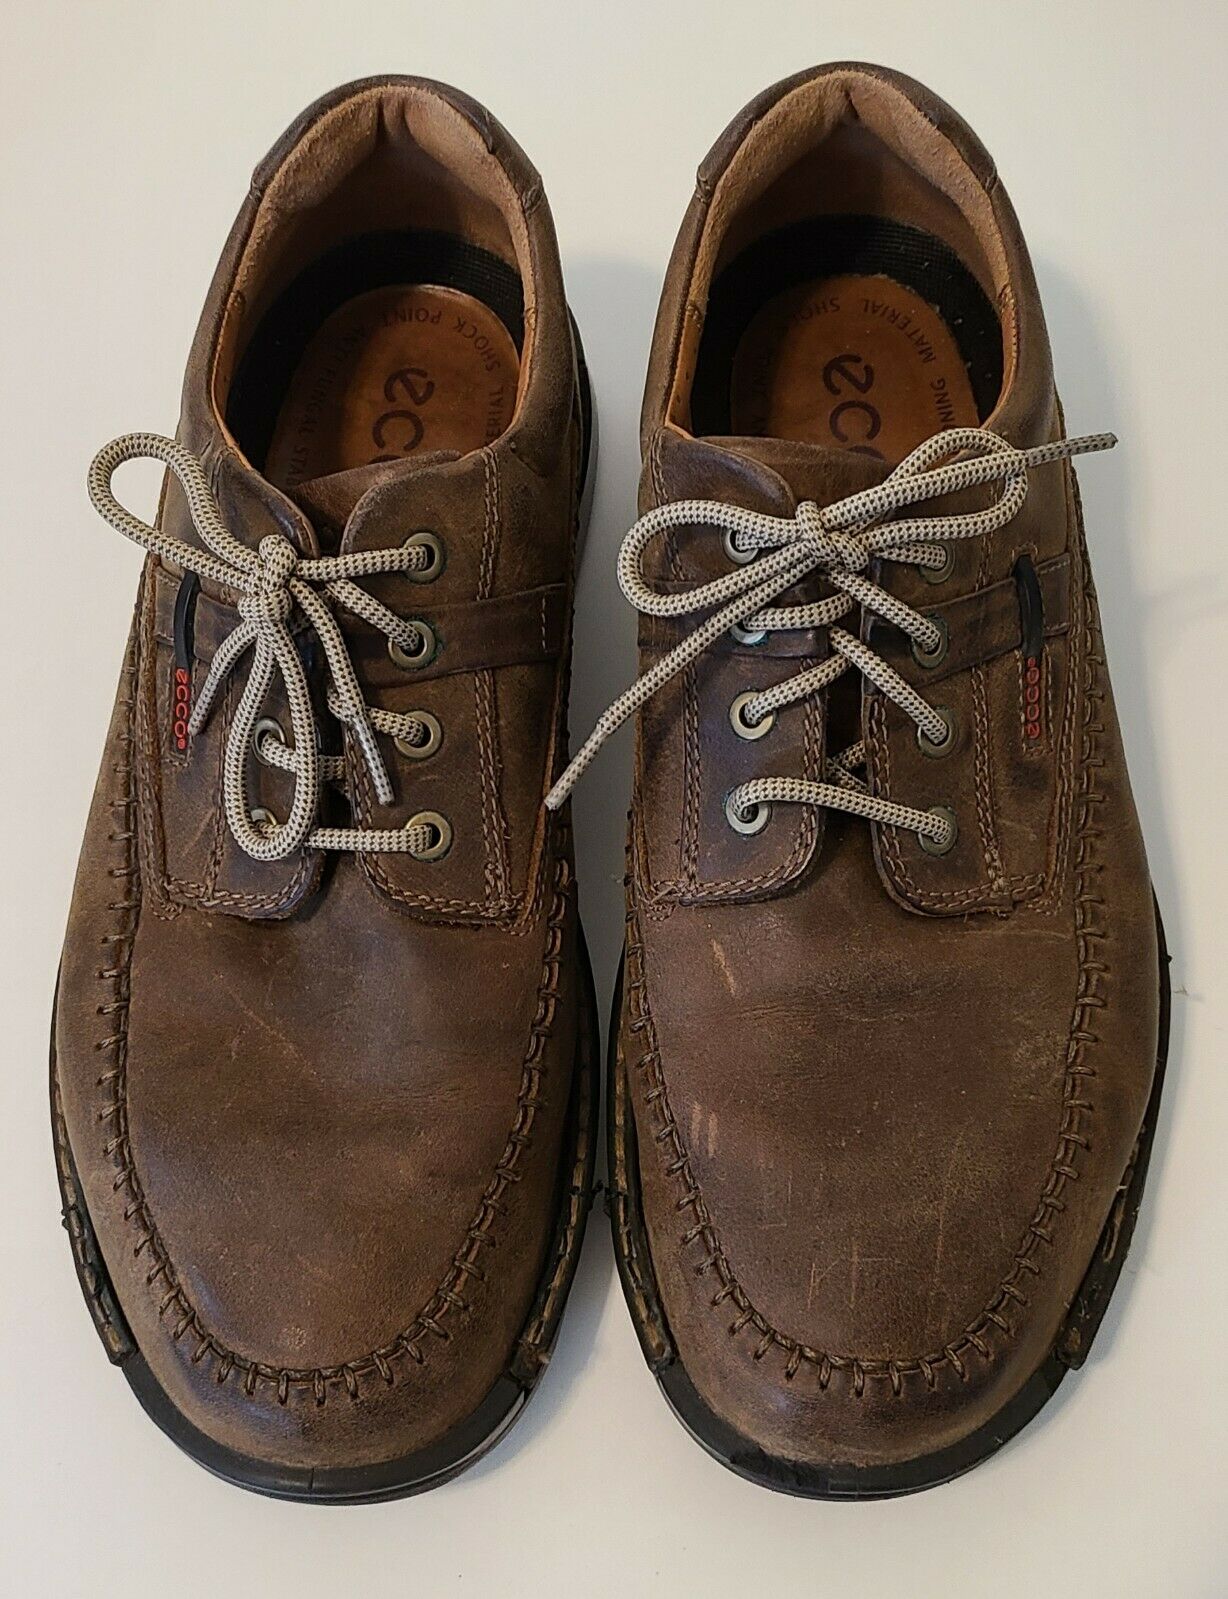 Ecco “Seawalker” Men's Casual Walking Shoe Size EU 44 US 10, 10.5 Good Condition